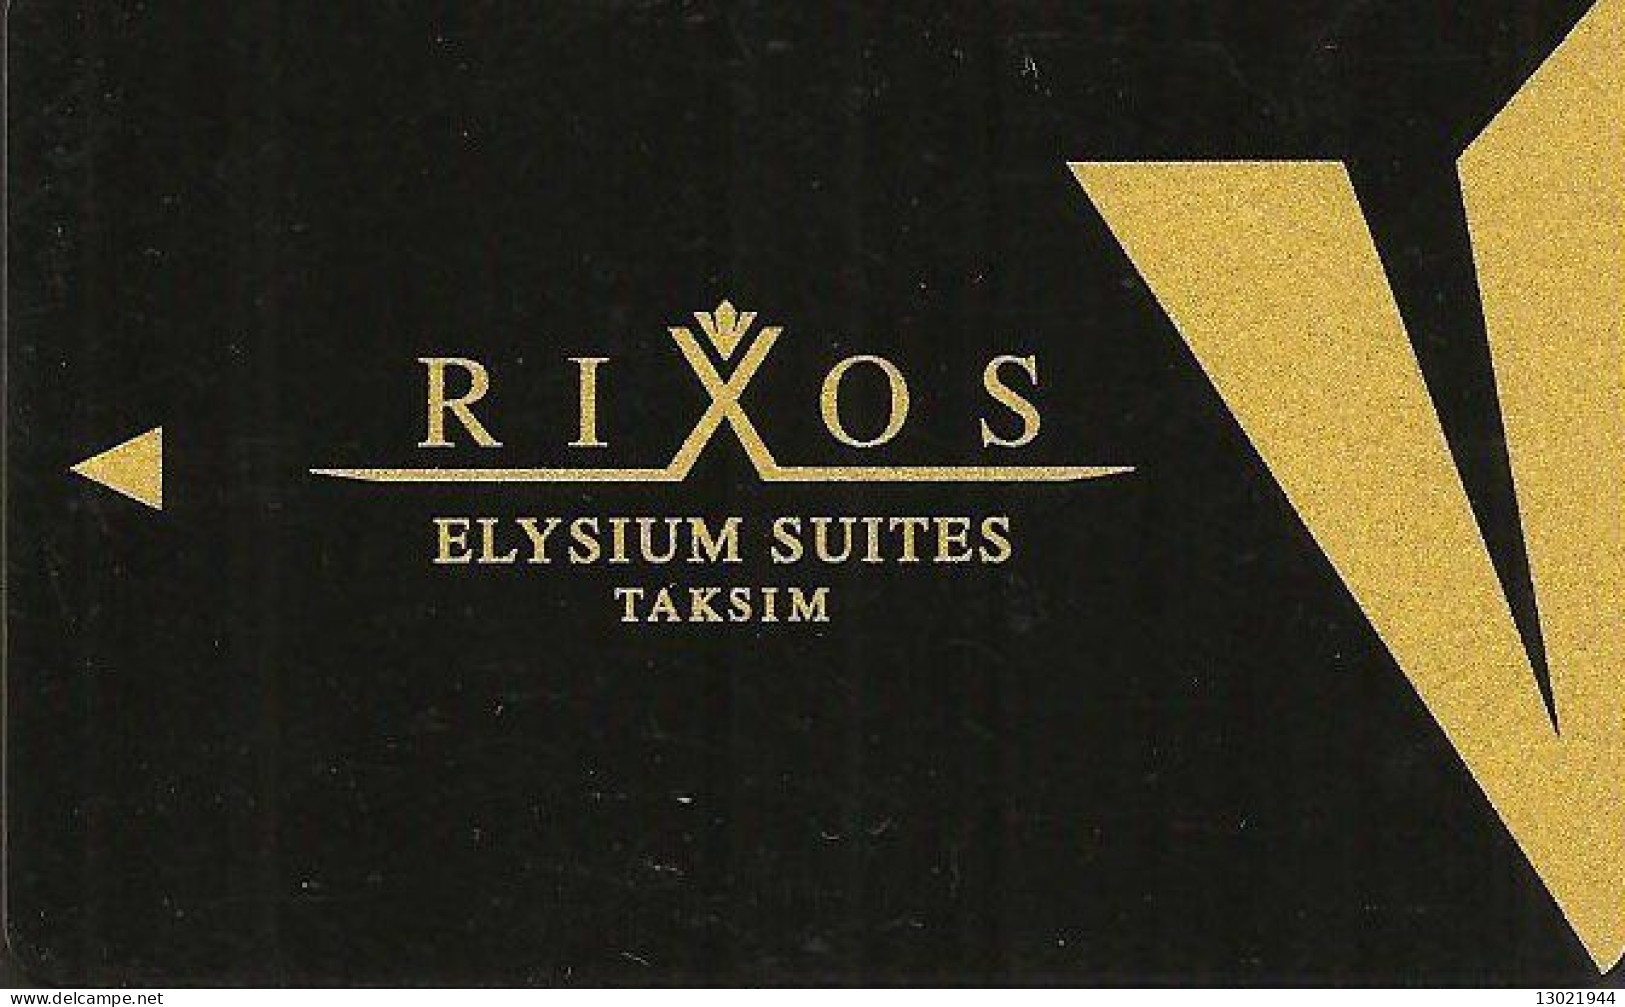 TURCHIA   KEY HOTEL  Rixos Elysium Suites Taksim - Hotel Keycards